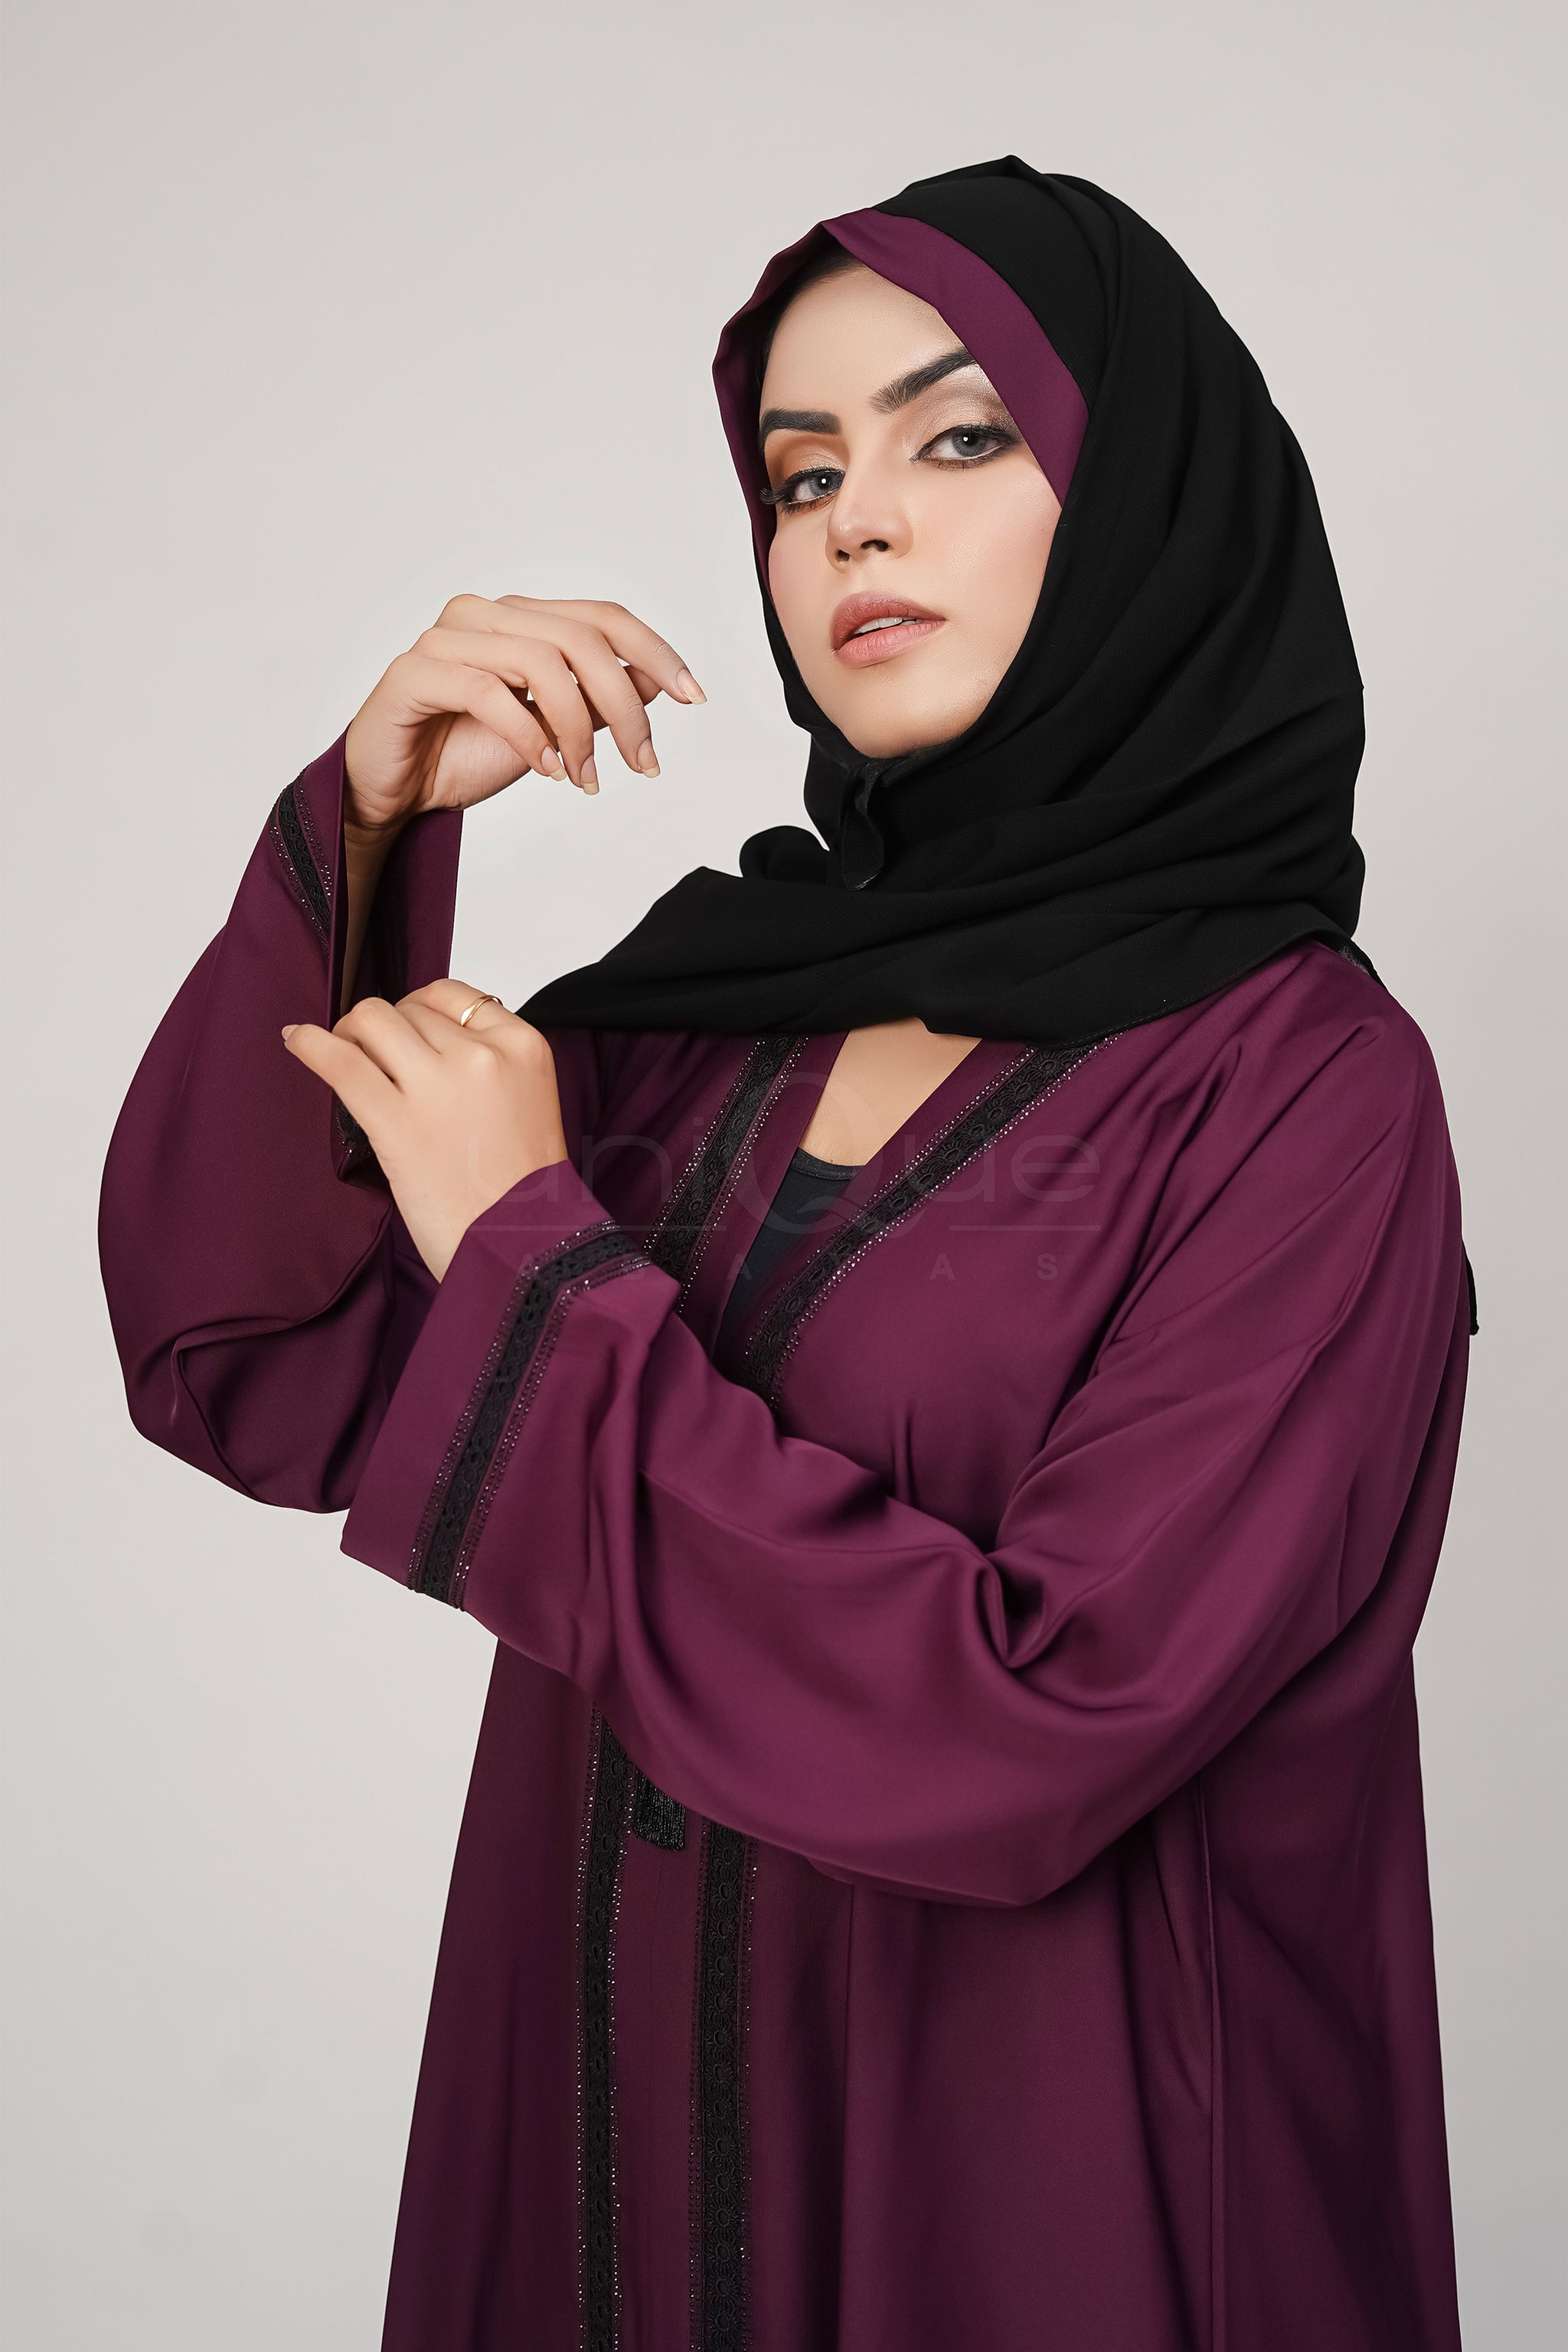 Silky Abaya Beautiful Muslim Women Clothing Khaki by Uniquewallart Abaya for Women, Front Side Detailed View